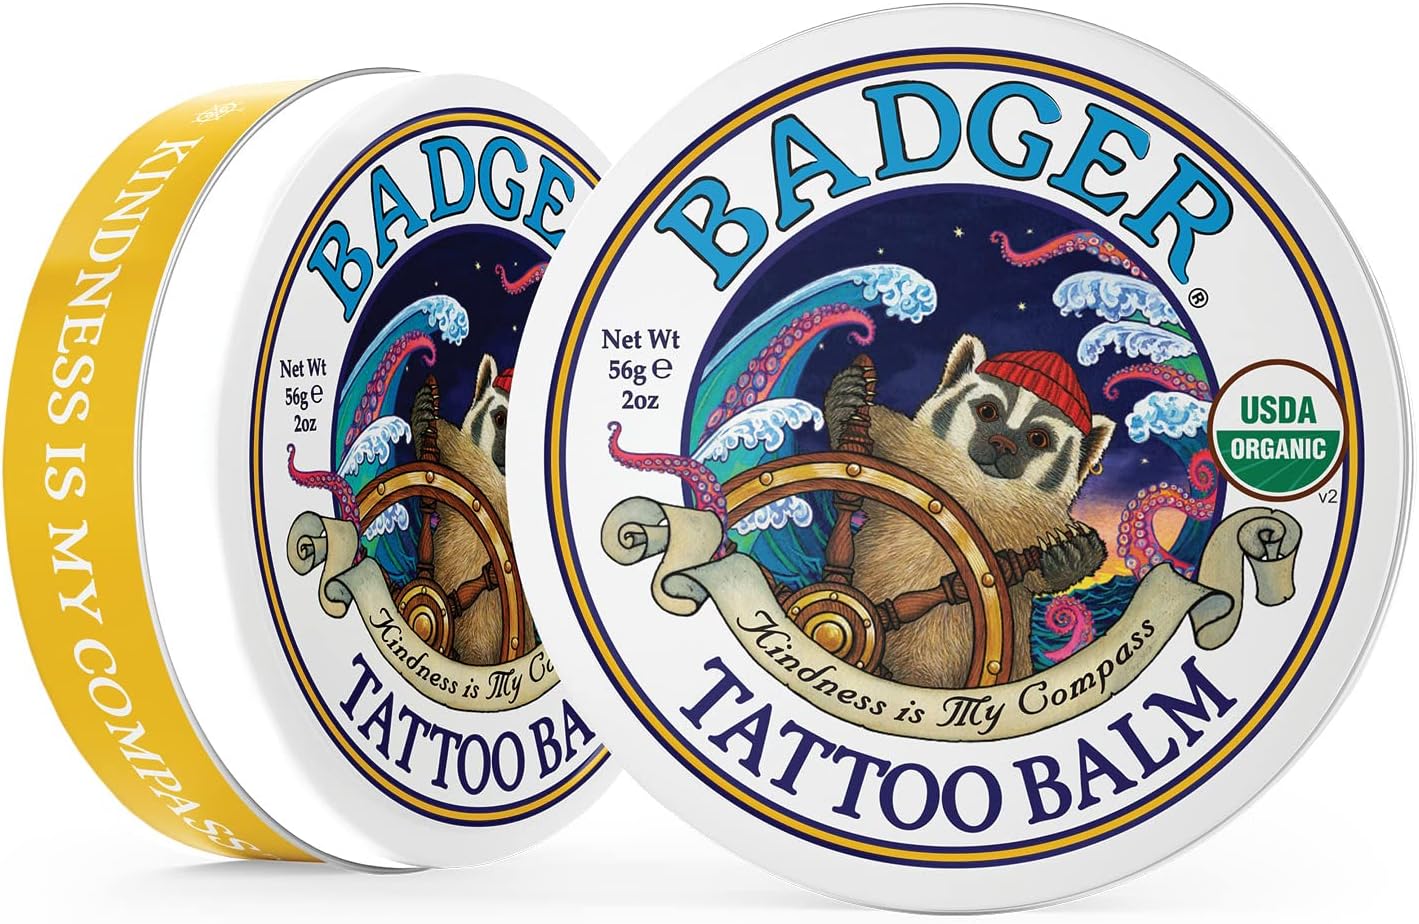 Badger Tattoo Balm